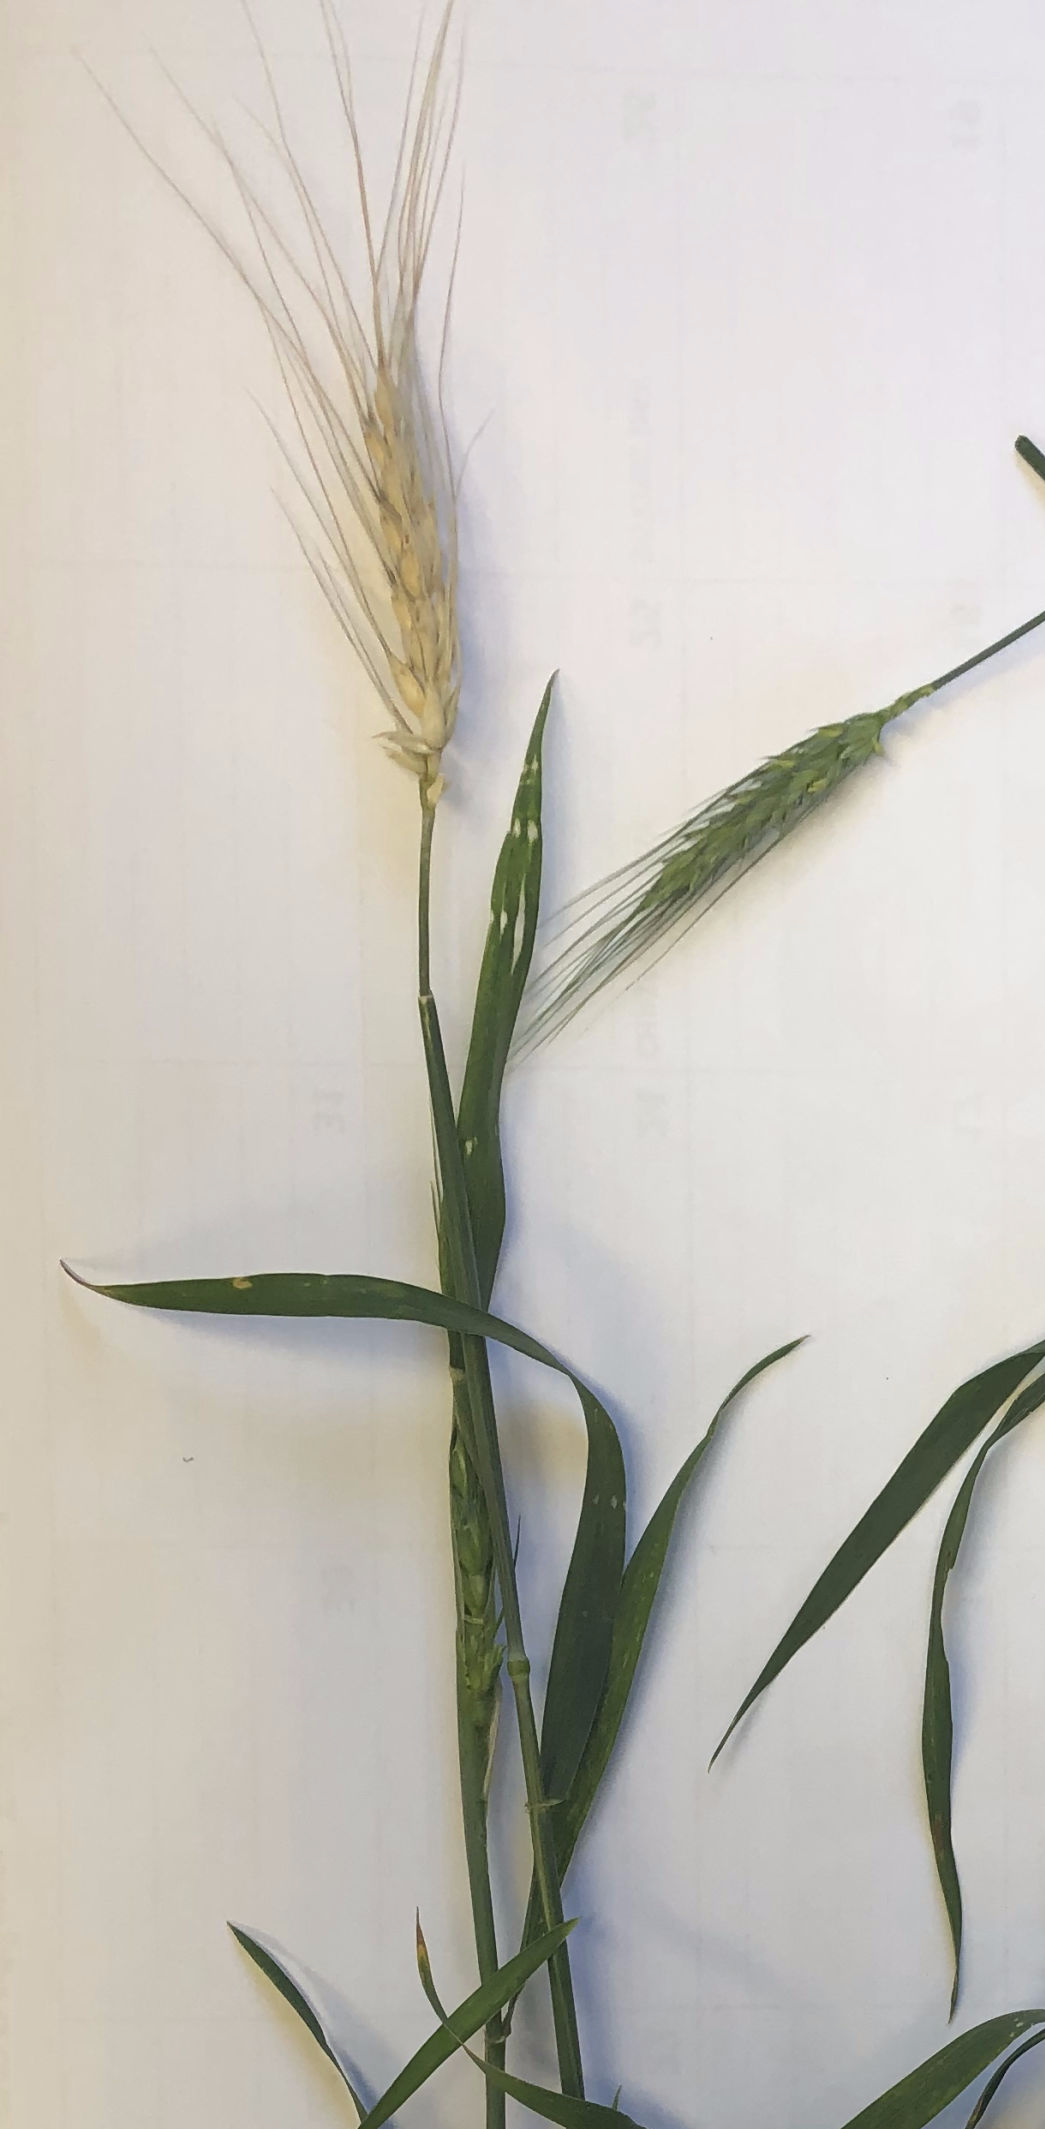 Wheat Stem Maggot Damage